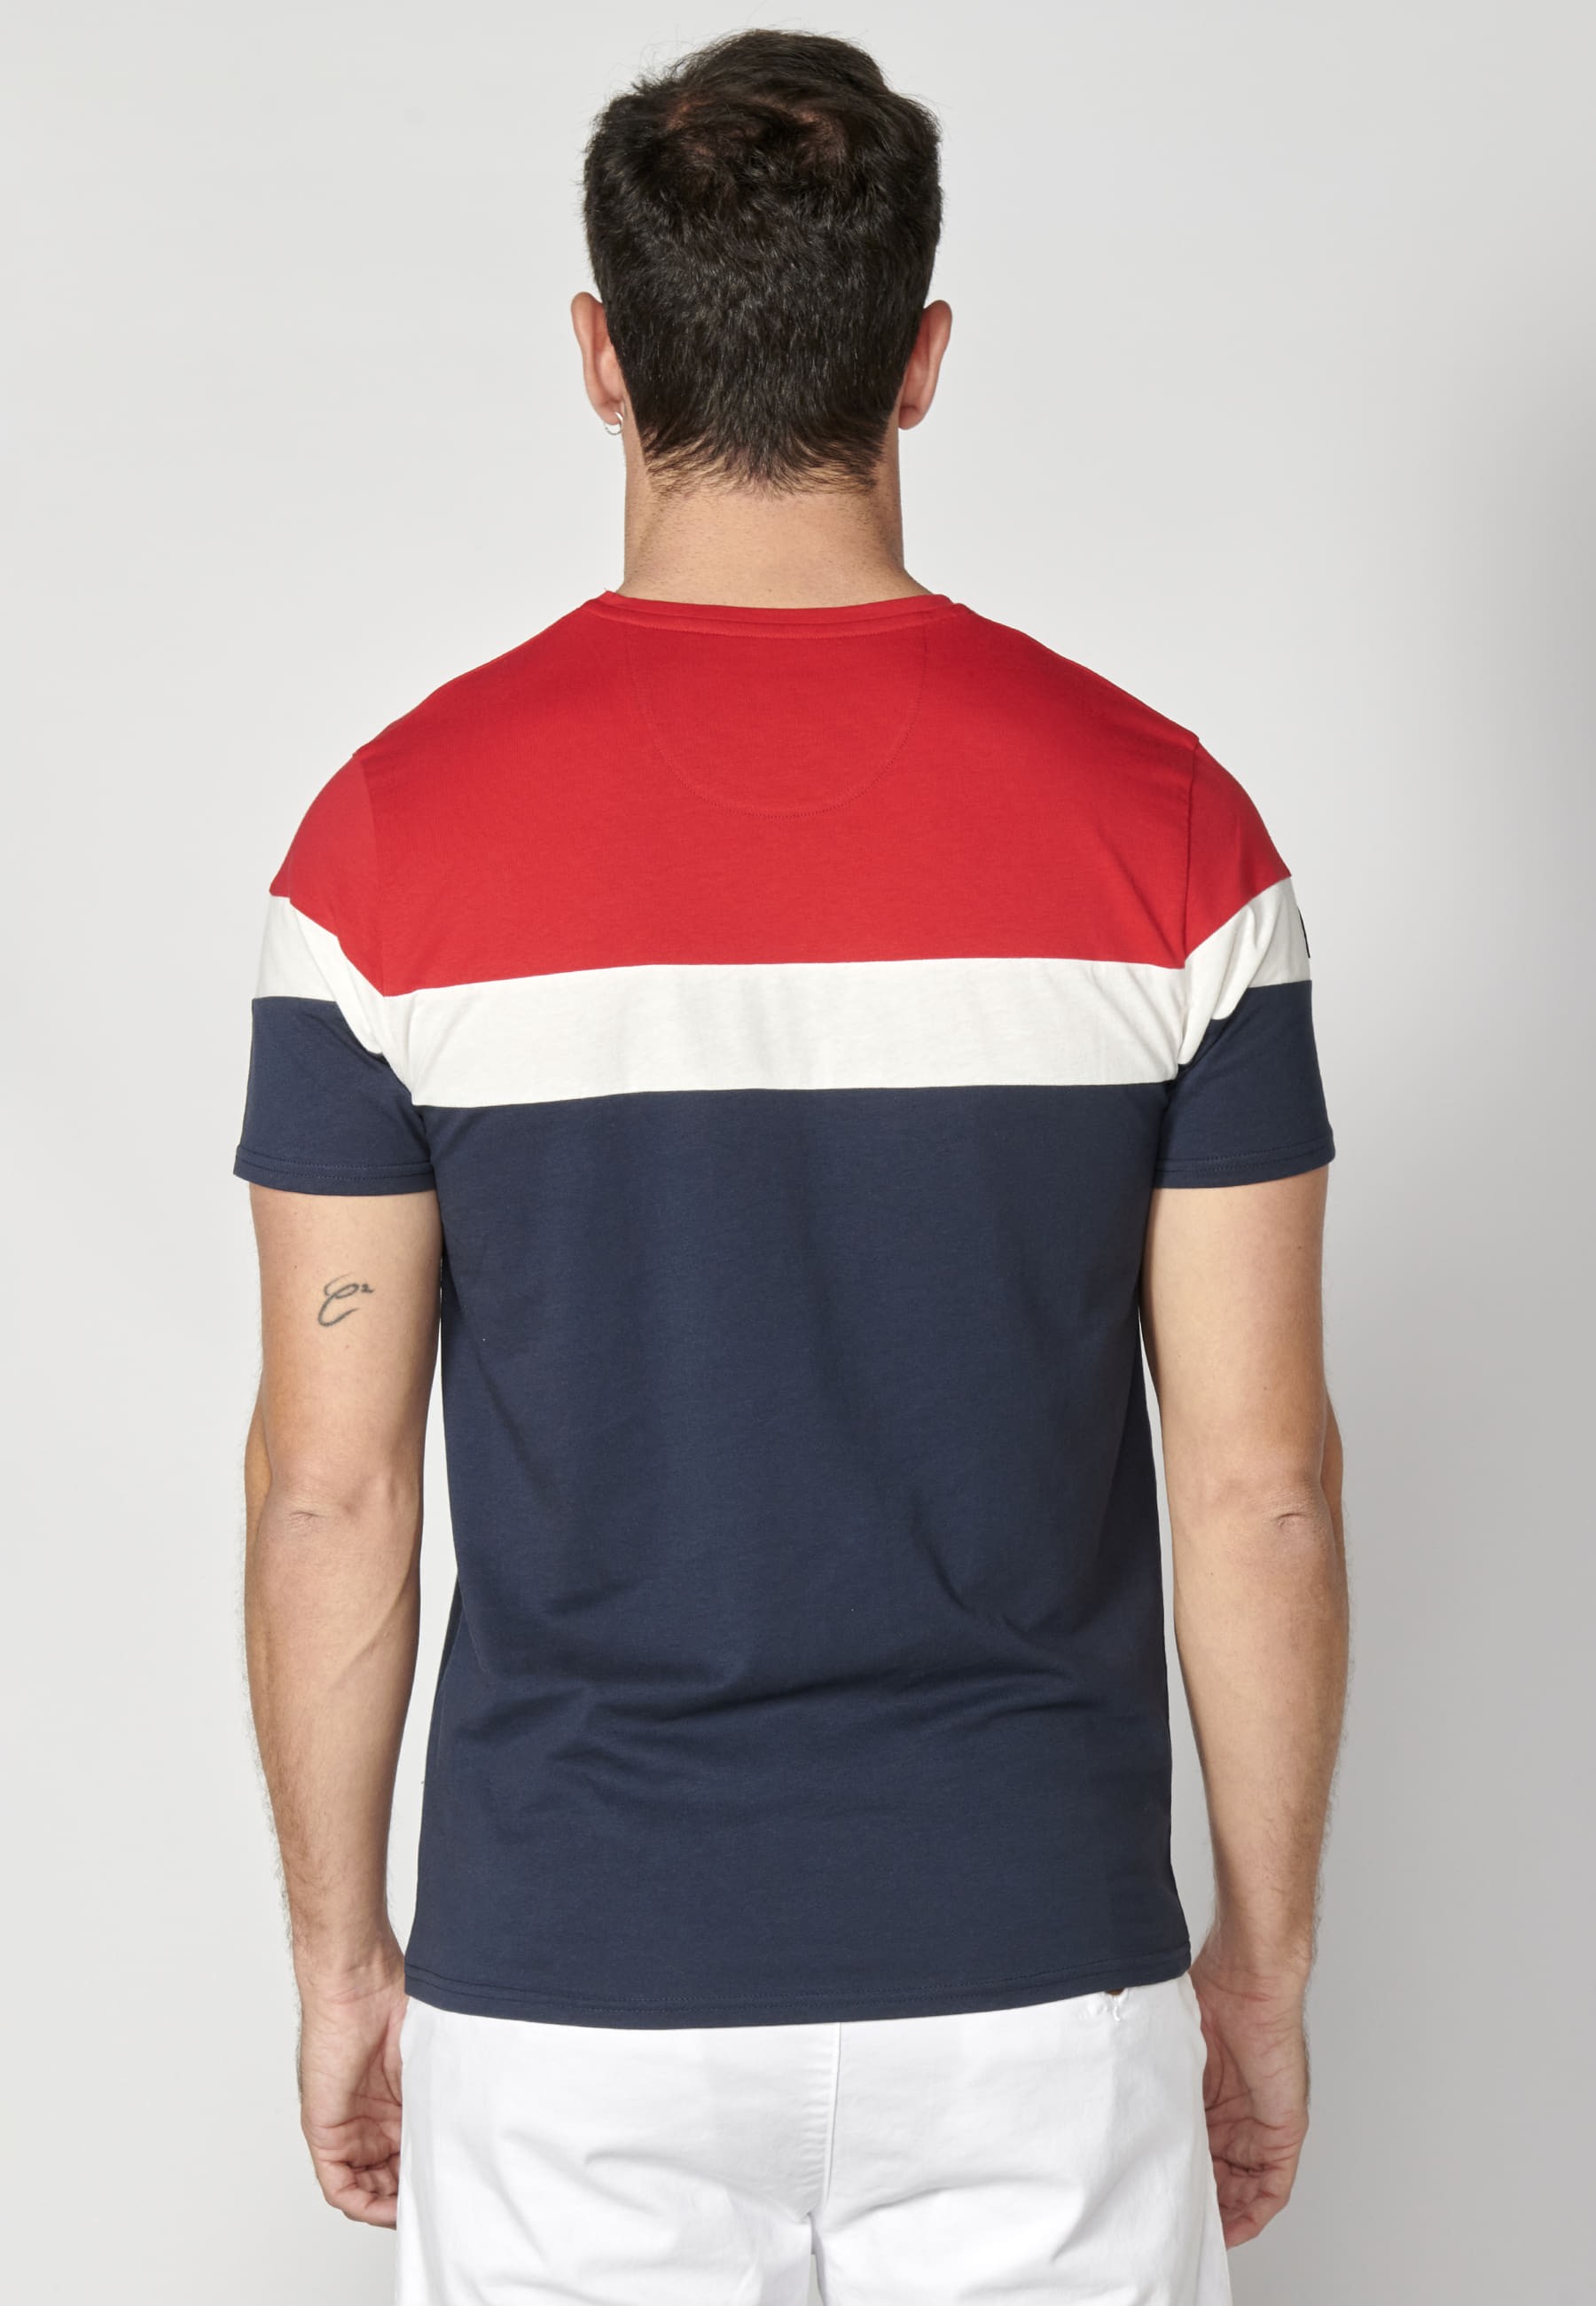 Camiseta manga corta de Algodón a rayas color Rojo para Hombre